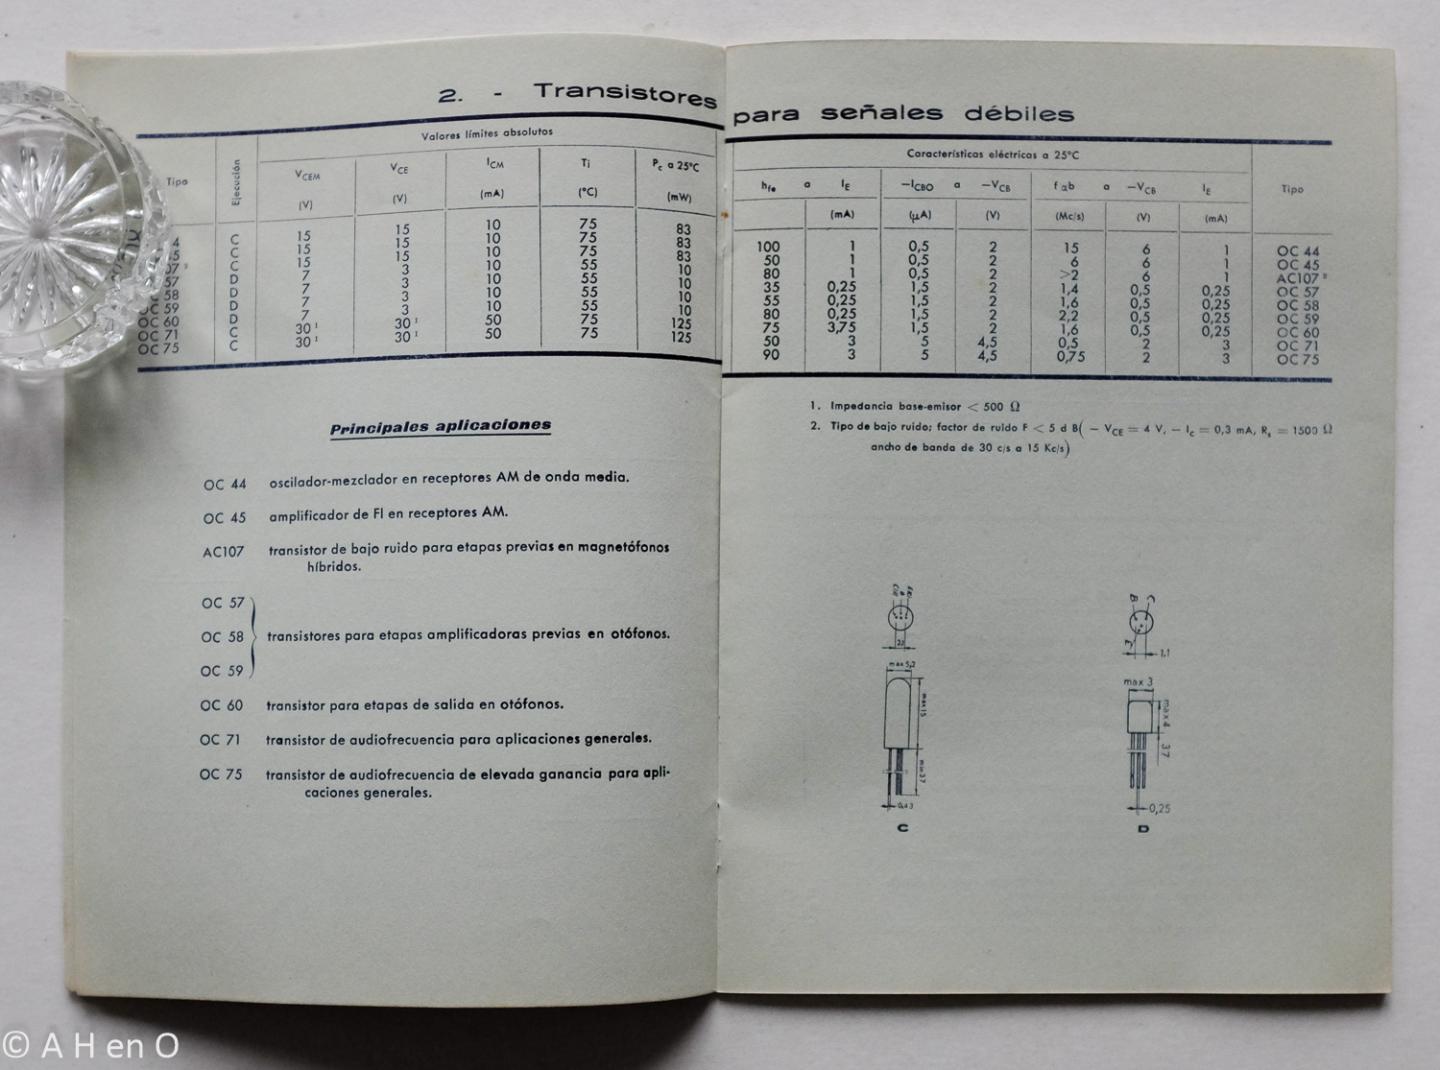 Philips Gloeilampenfabrieken Nederland n.v., Eindhoven - Transistores - Manual de característica